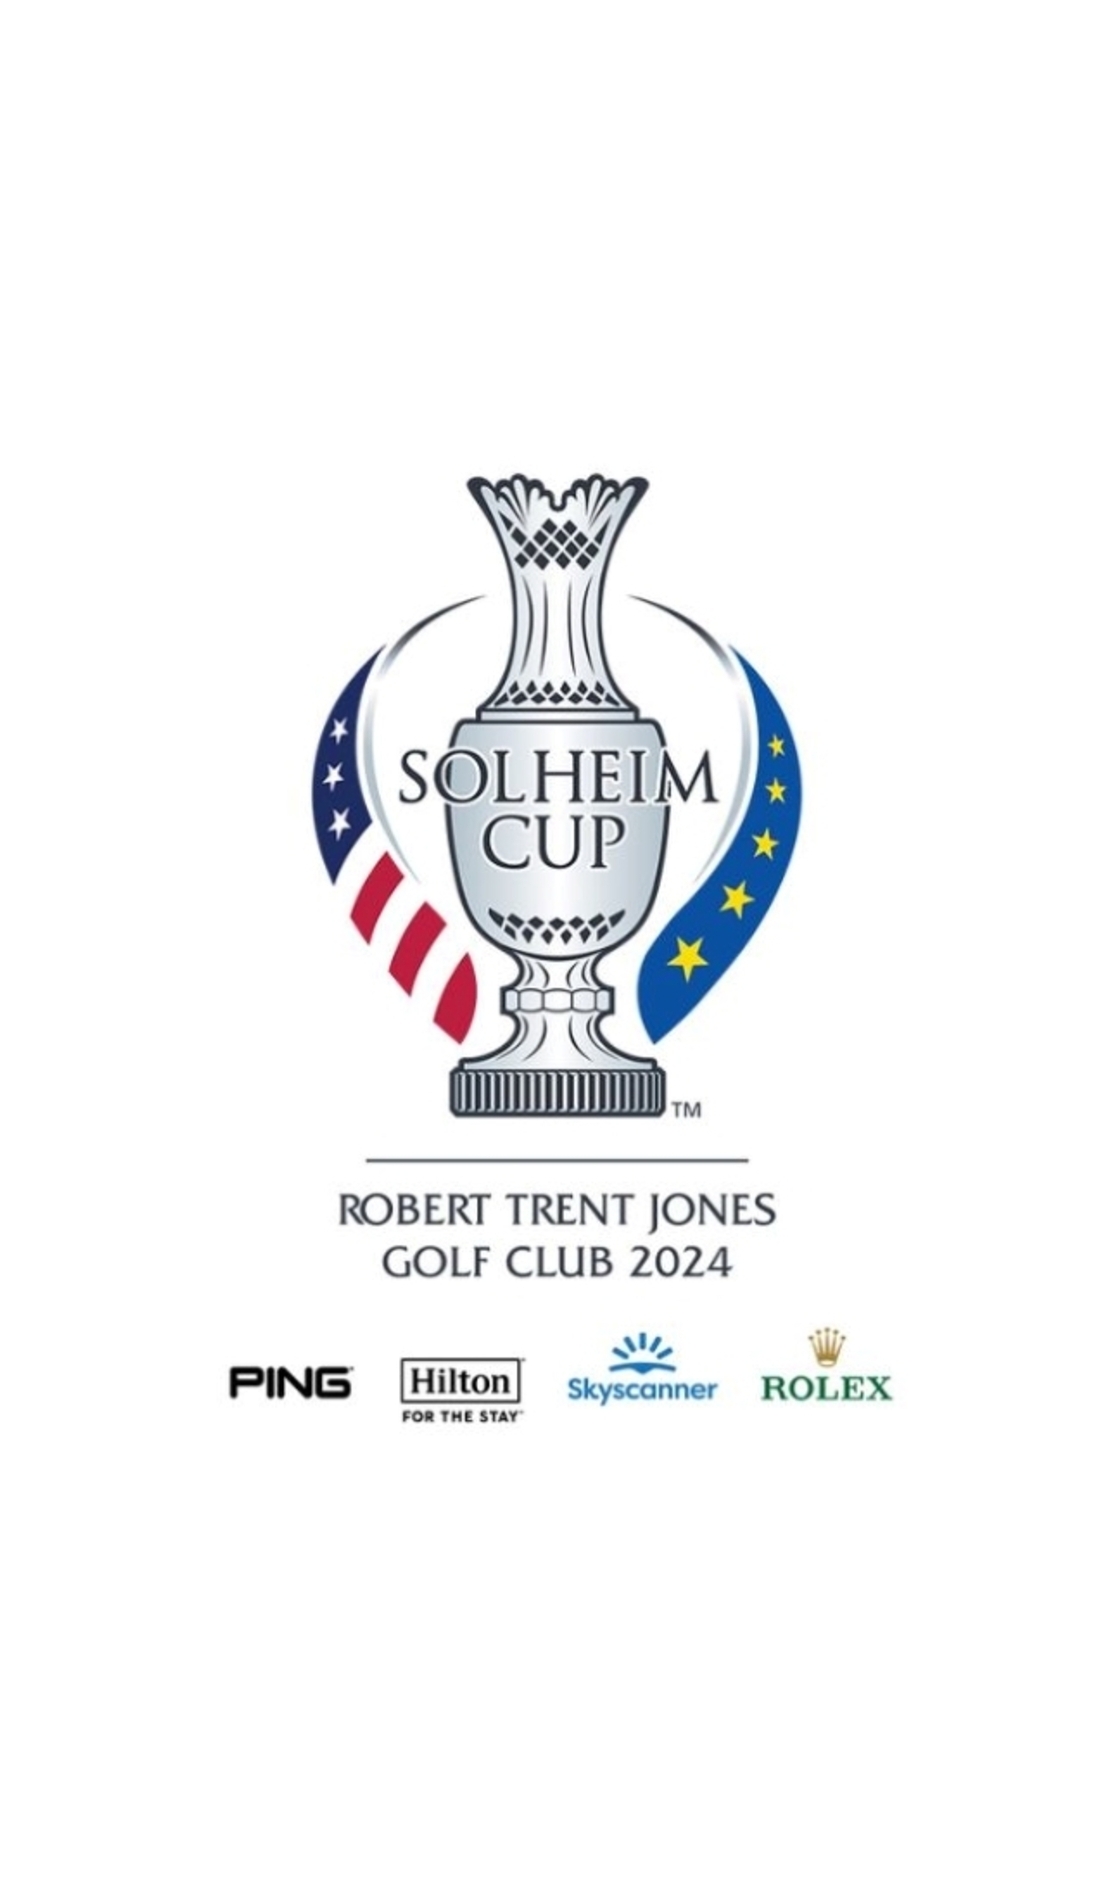 A Solheim Cup live event